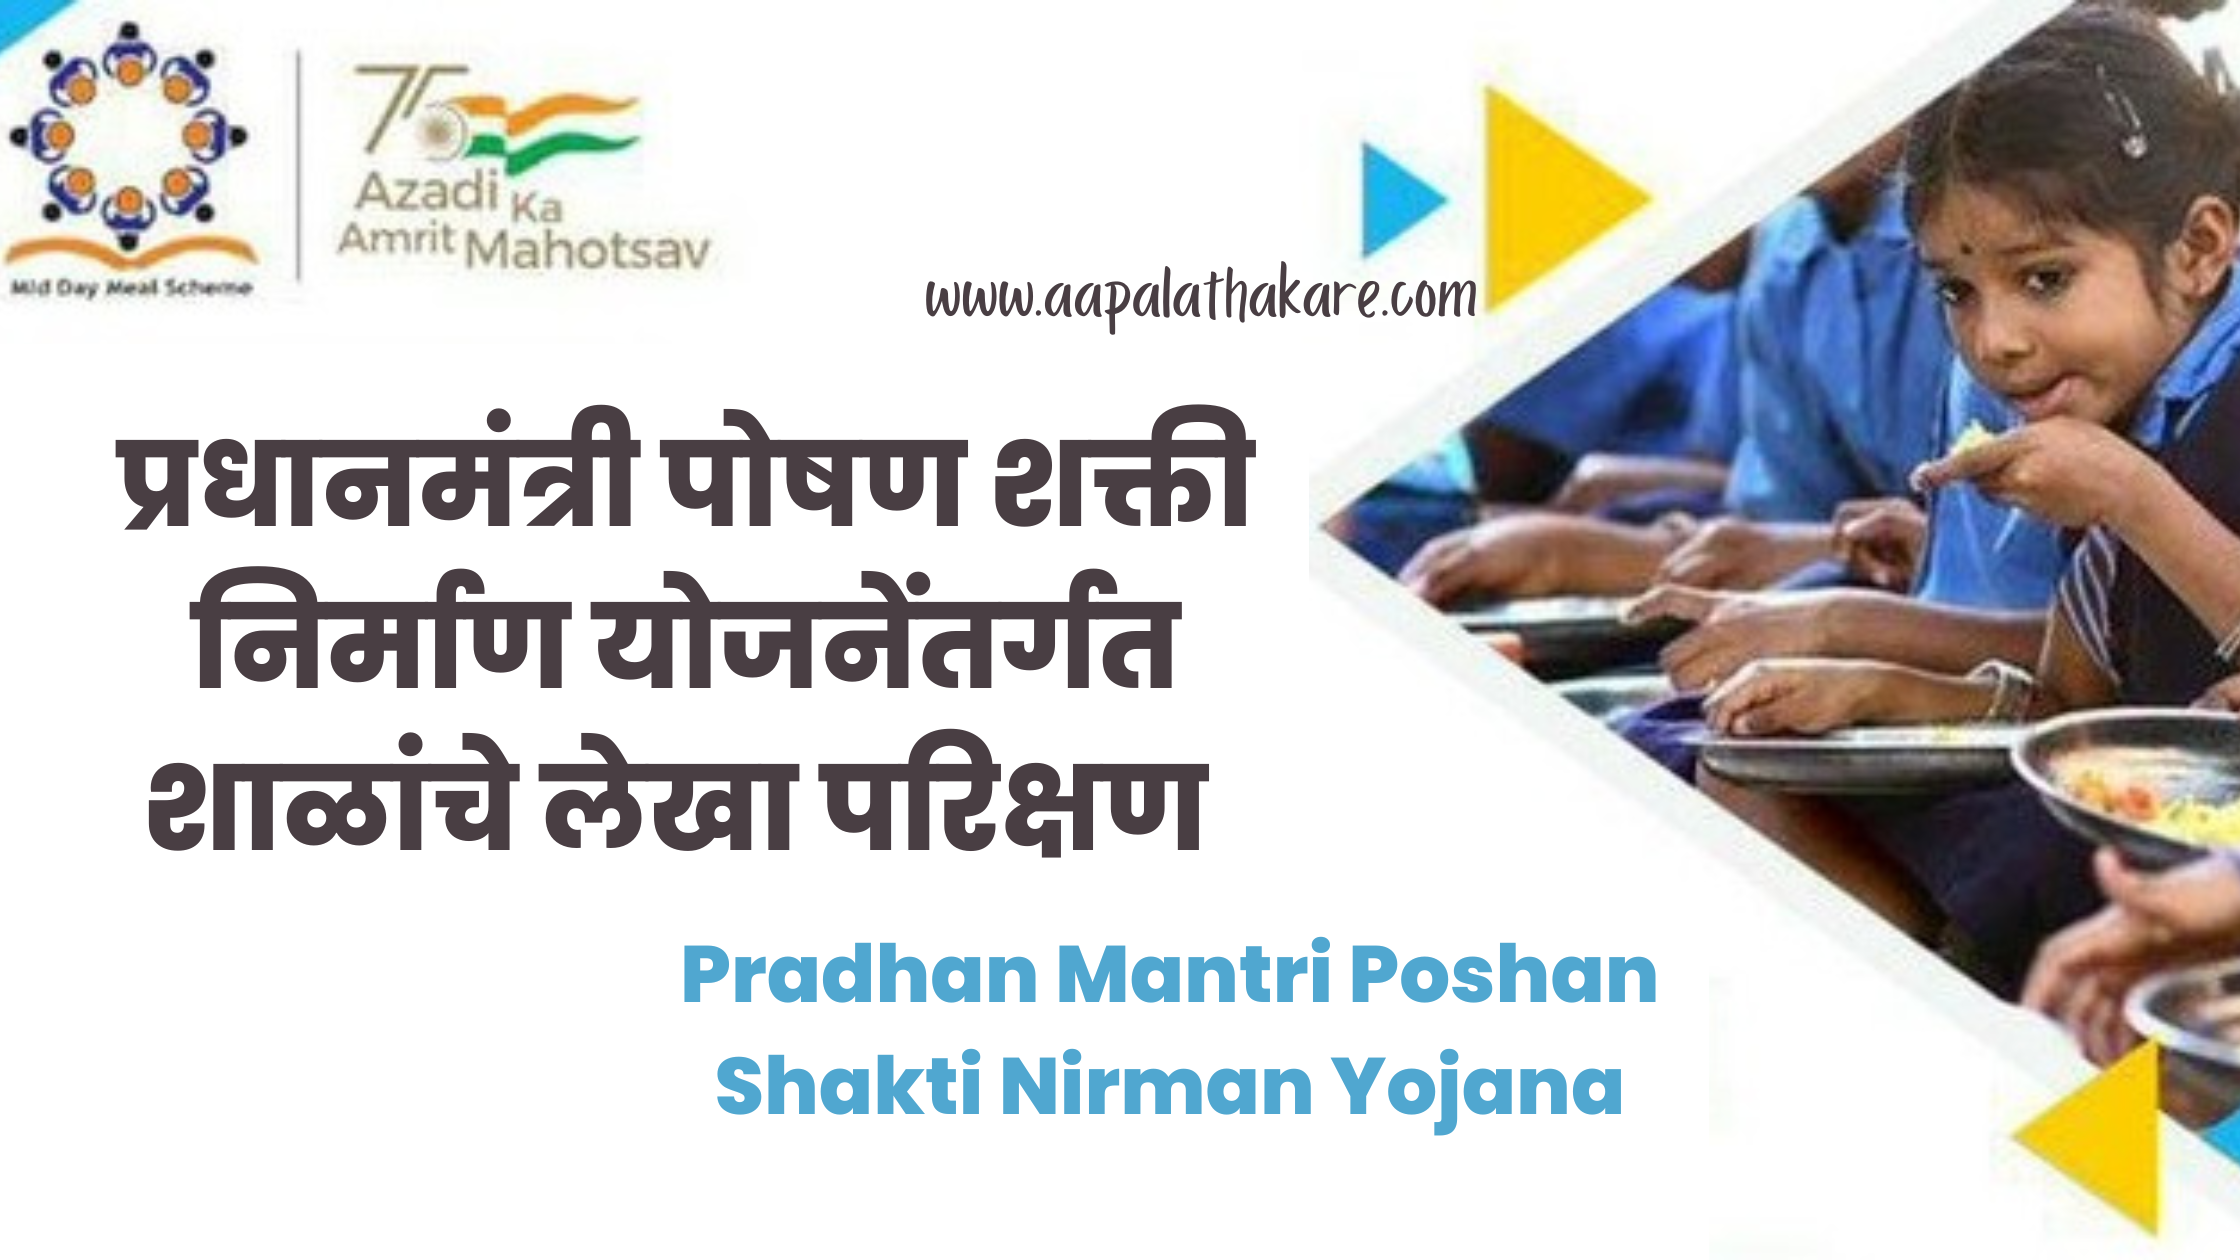 प्रधानमंत्री पोषण शक्ती निर्माण योजनेंतर्गत शाळांचे लेखा परिक्षण Audit of schools under Pradhan Mantri Poshan Shakti Nirman Yojana